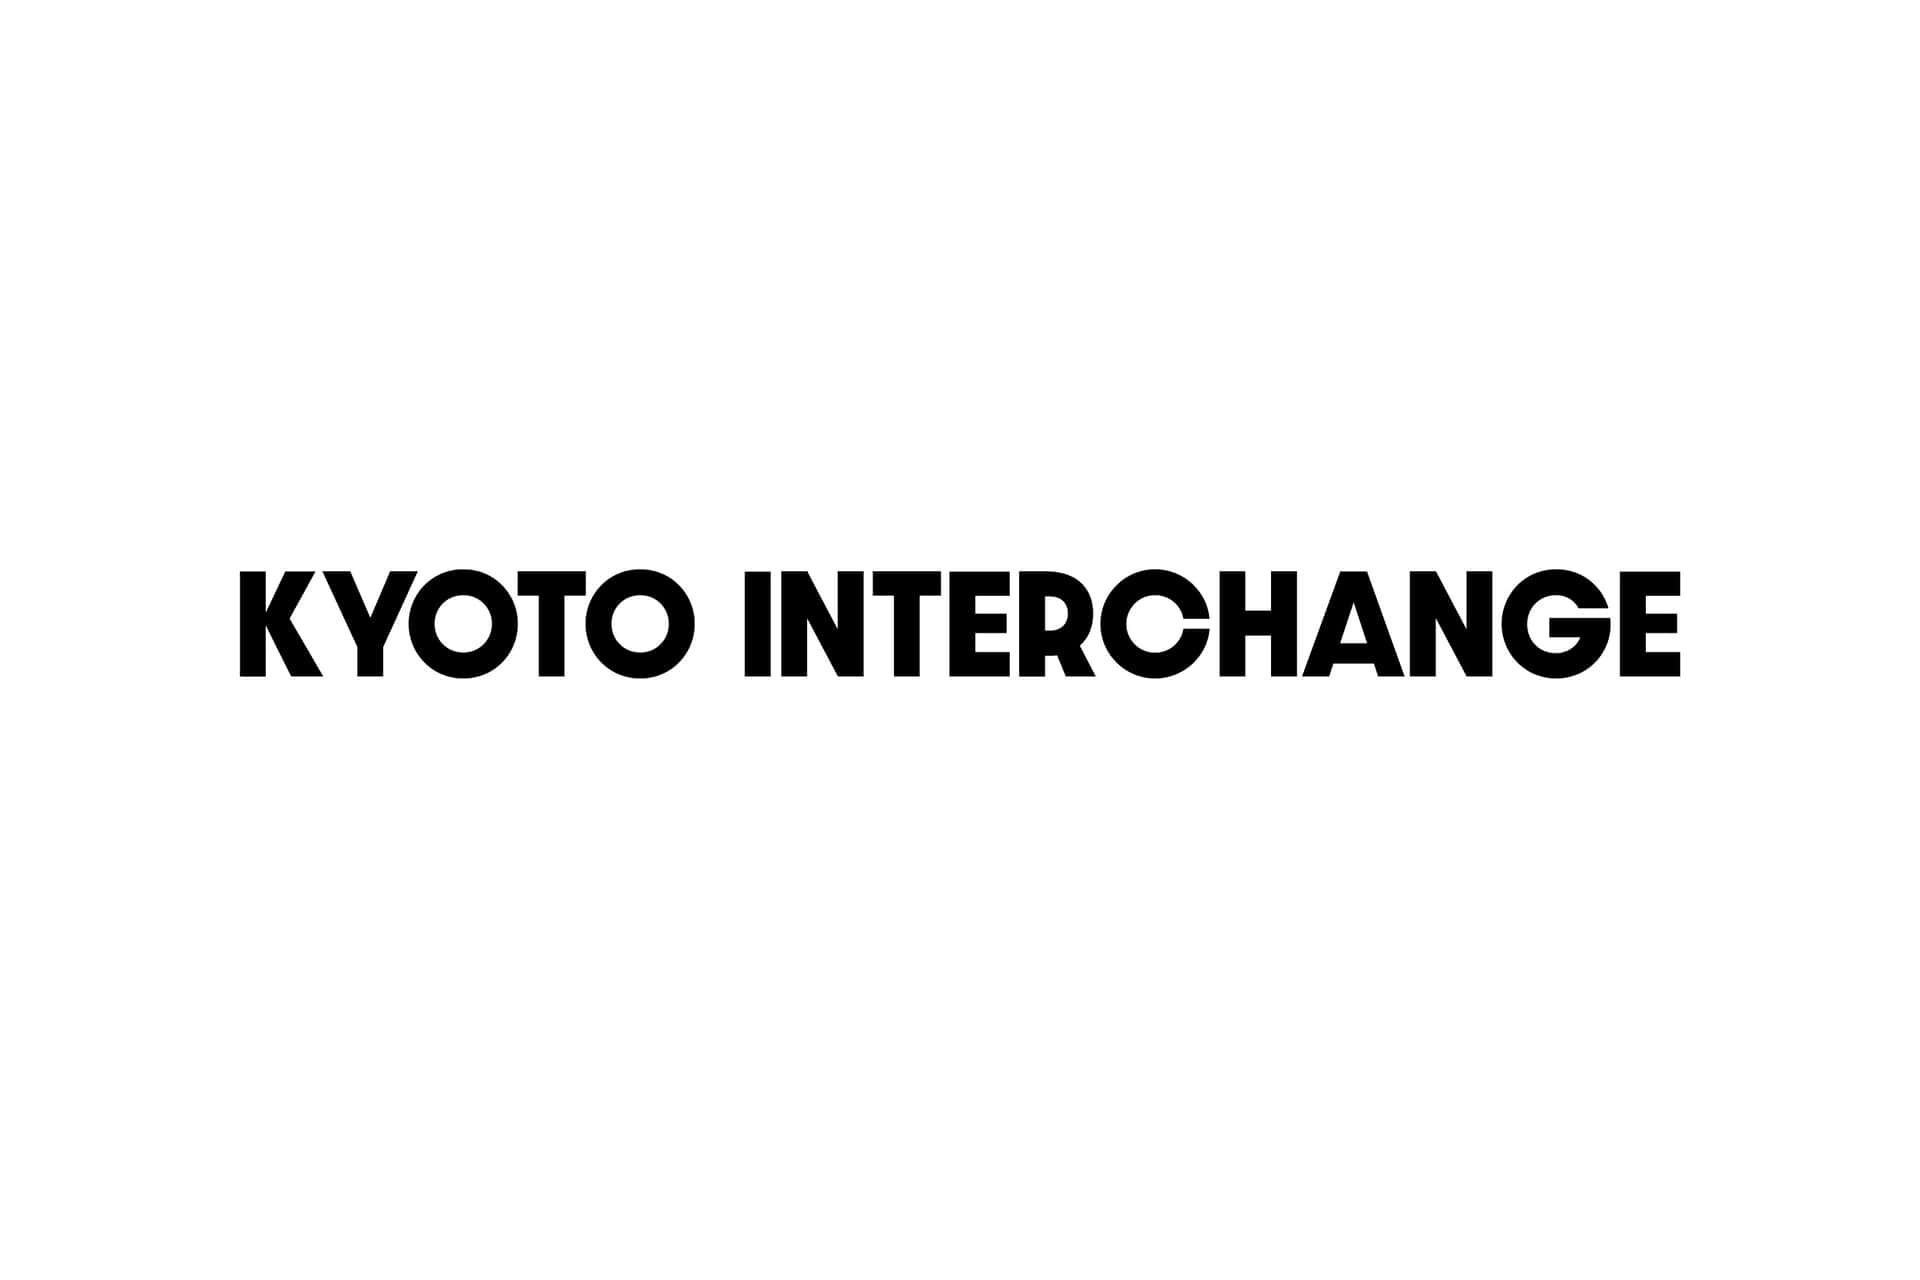 Kyoto Interchange Logo On A White Background Wallpaper